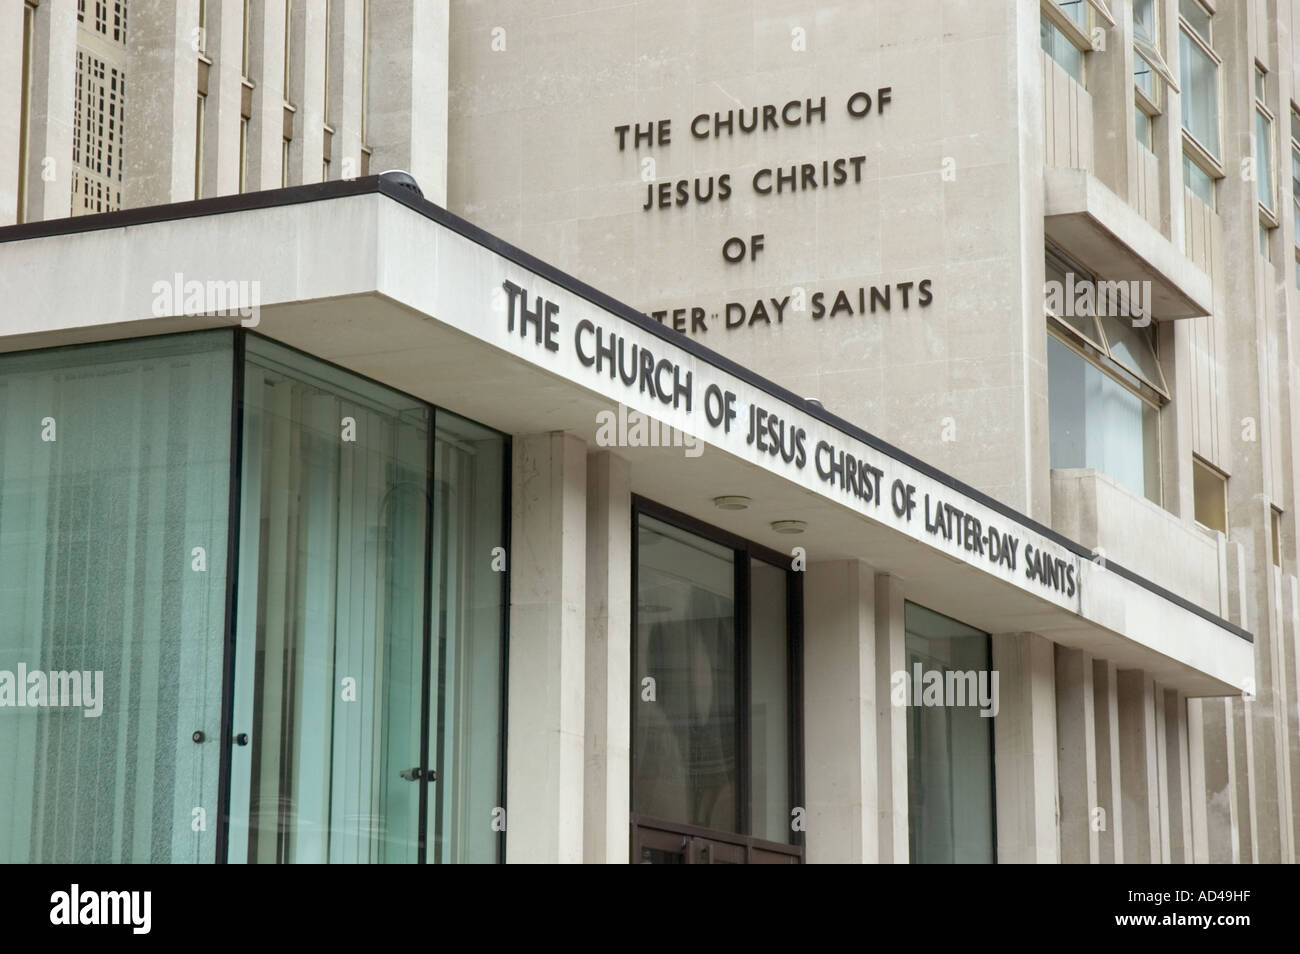 The Church of Jesus Christ of Latter Day Saints Mormons in Exhibition Road Kensington London UK Stock Photo